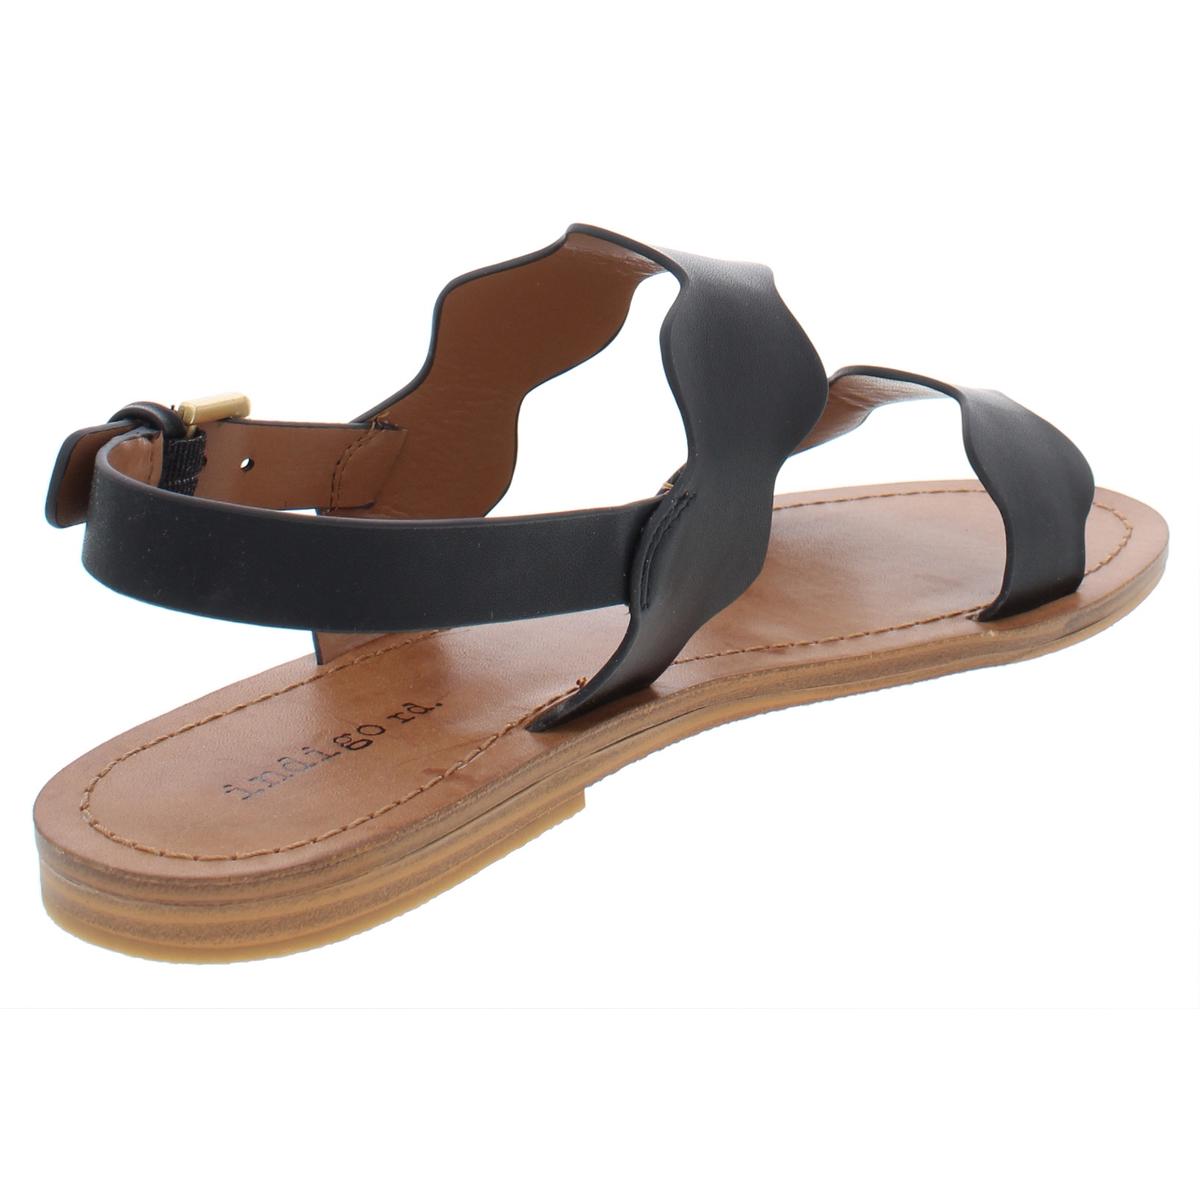 Indigo Rd. Womens She Black Flat Sandals Shoes 8.5 Medium (B,M) BHFO ...